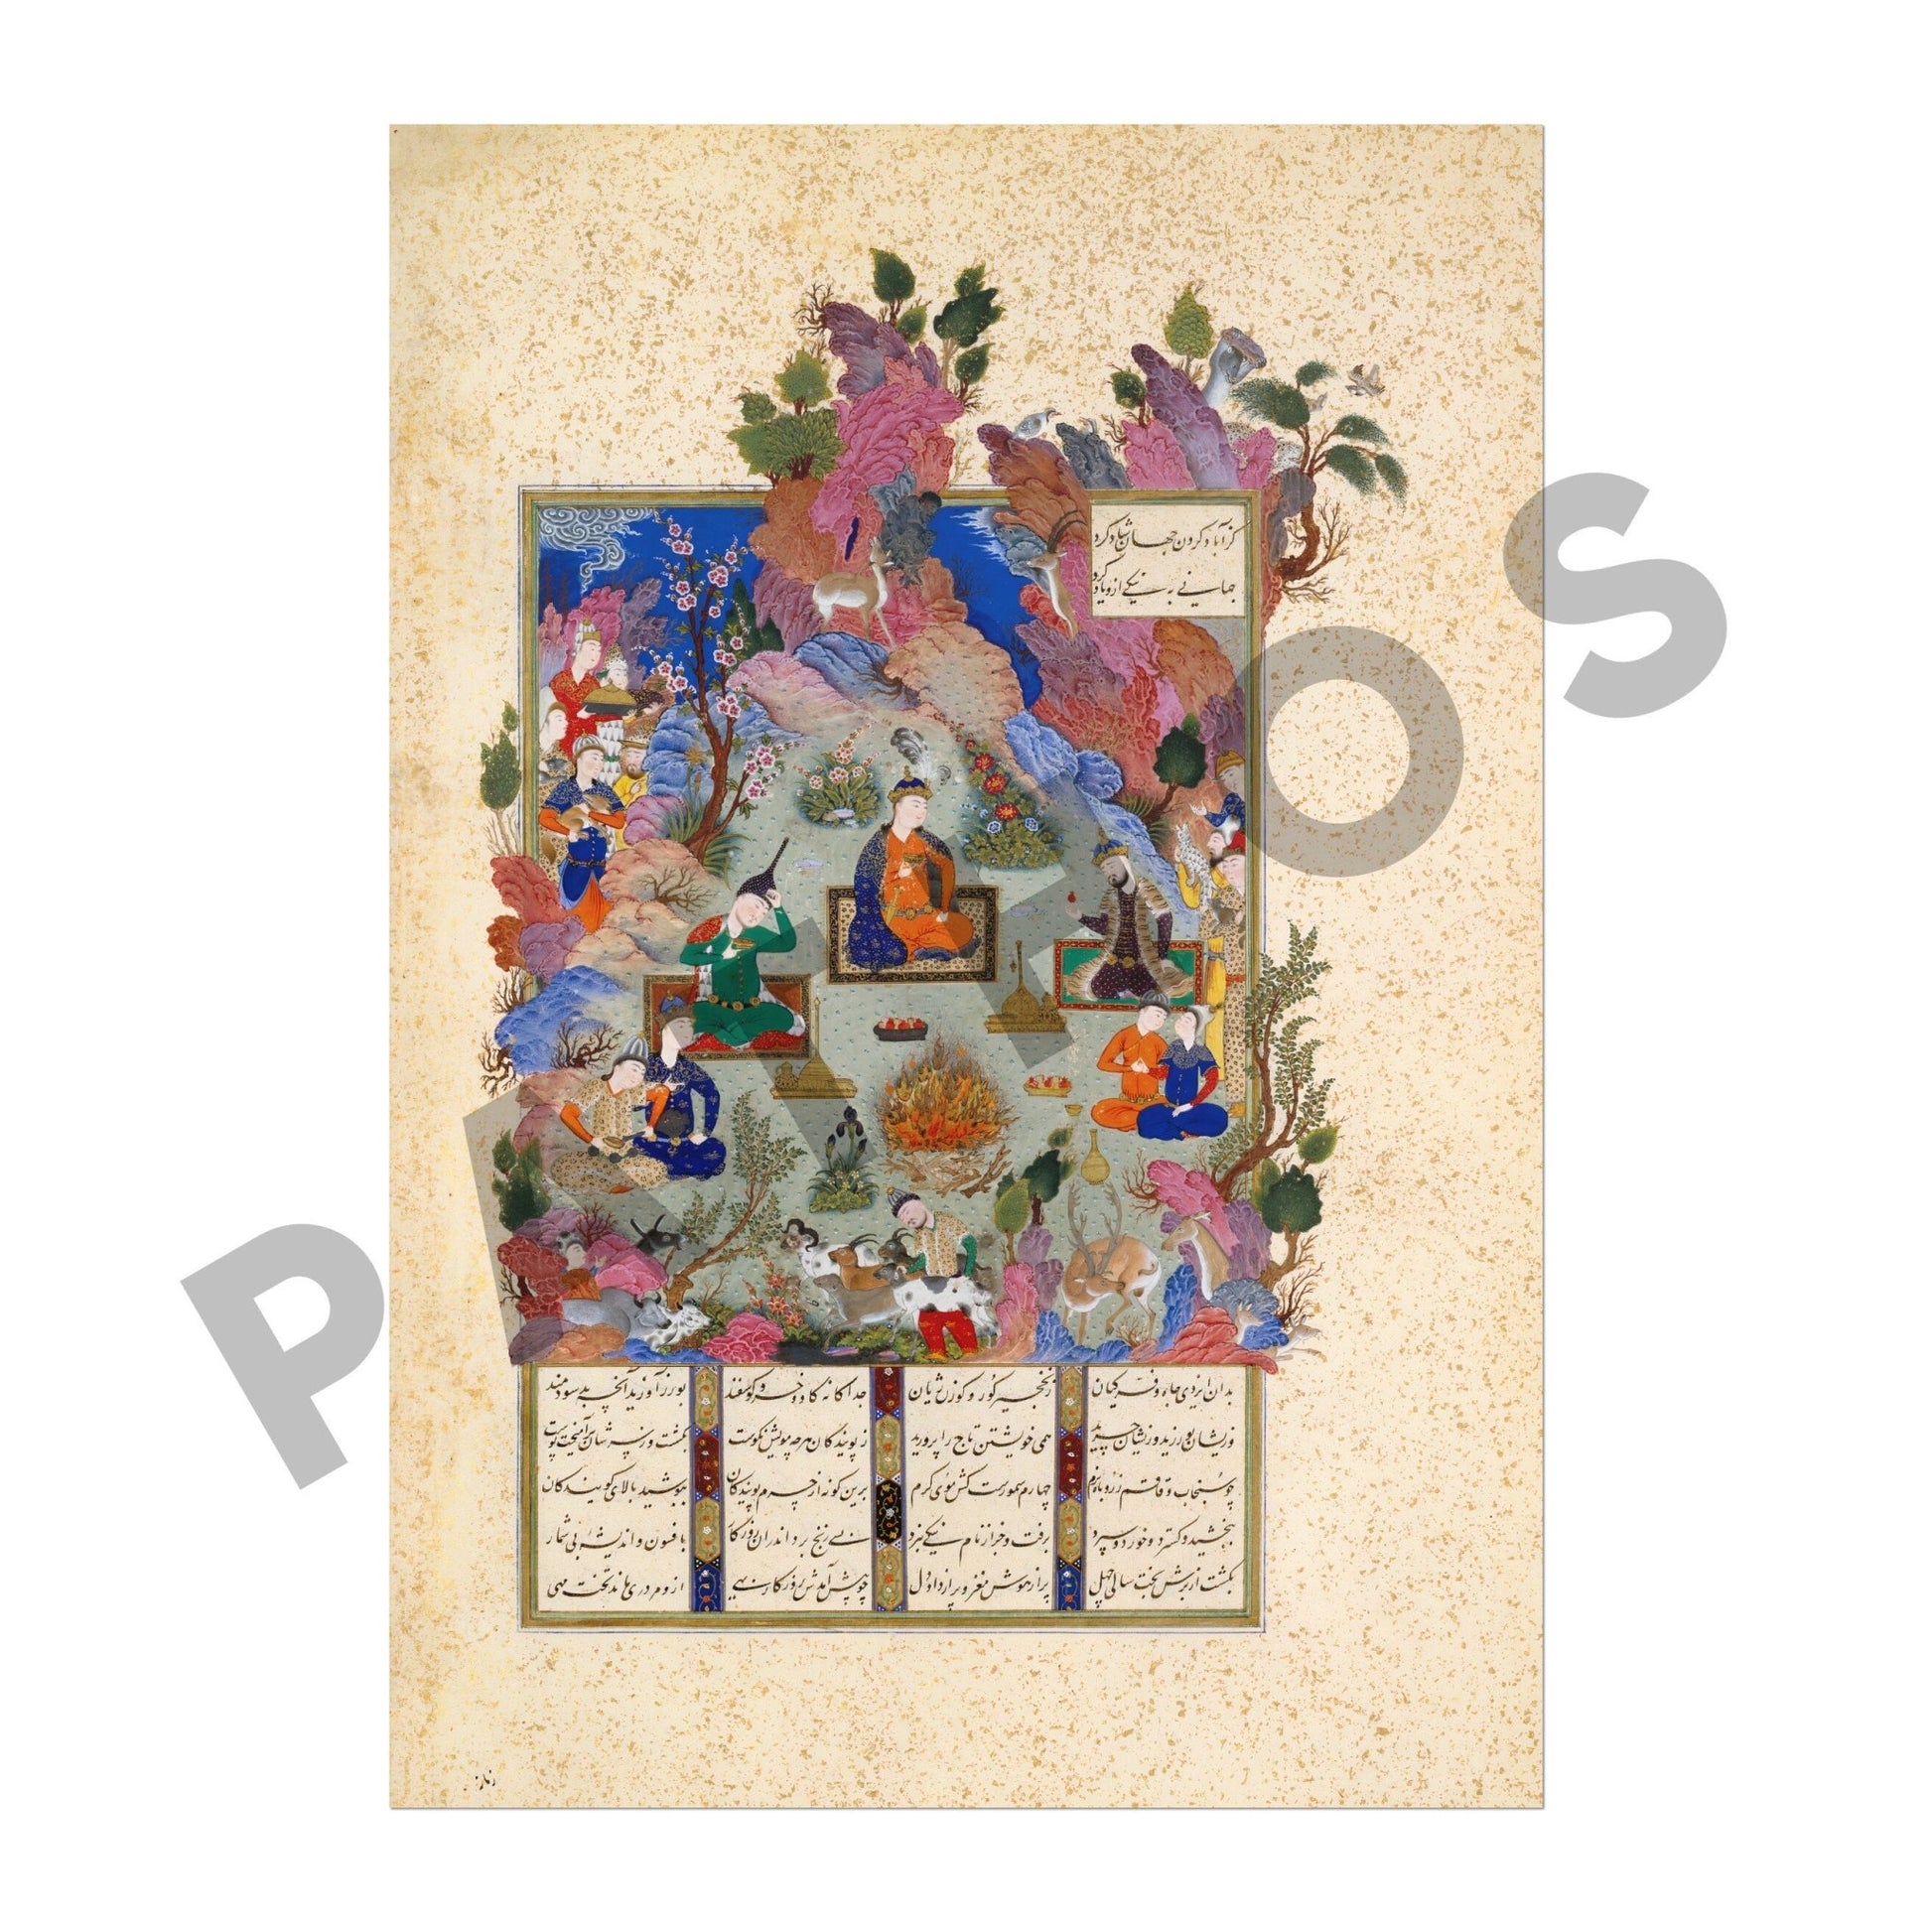 The Feast Of Sada (Traditional Persian Miniature Art from Shahnameh) - Pathos Studio - Art Prints